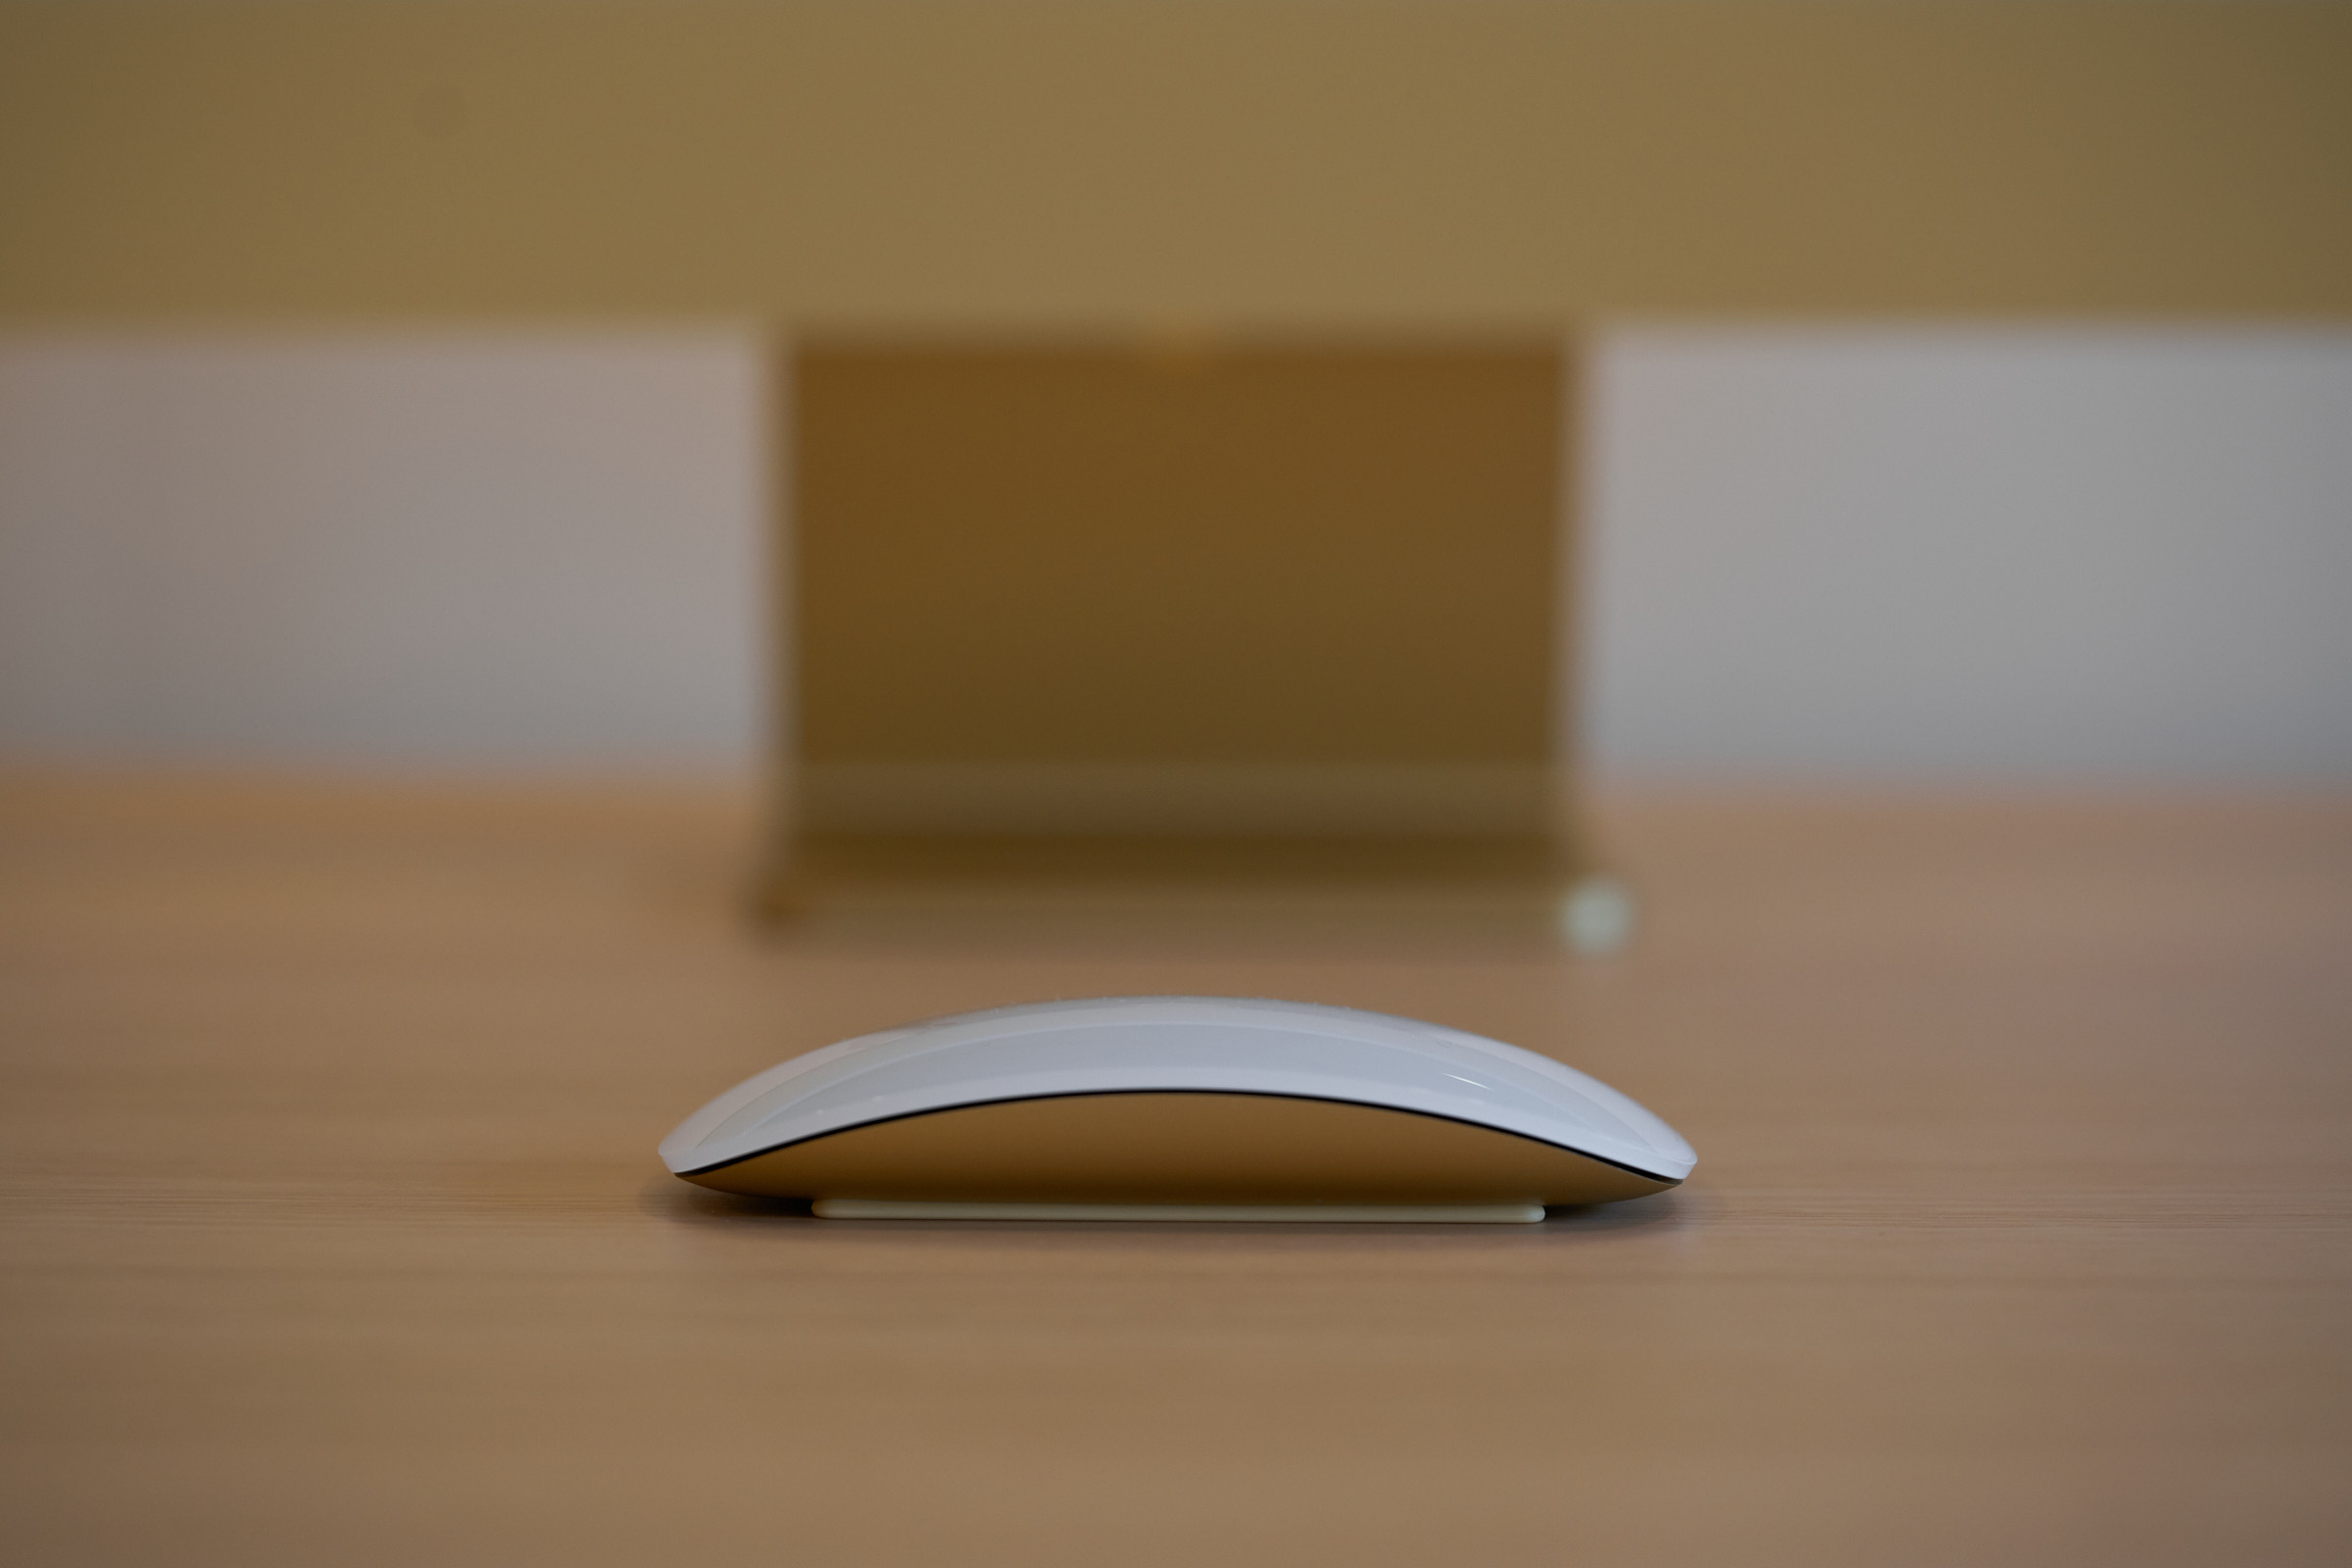 New 24" Apple iMac Mouse